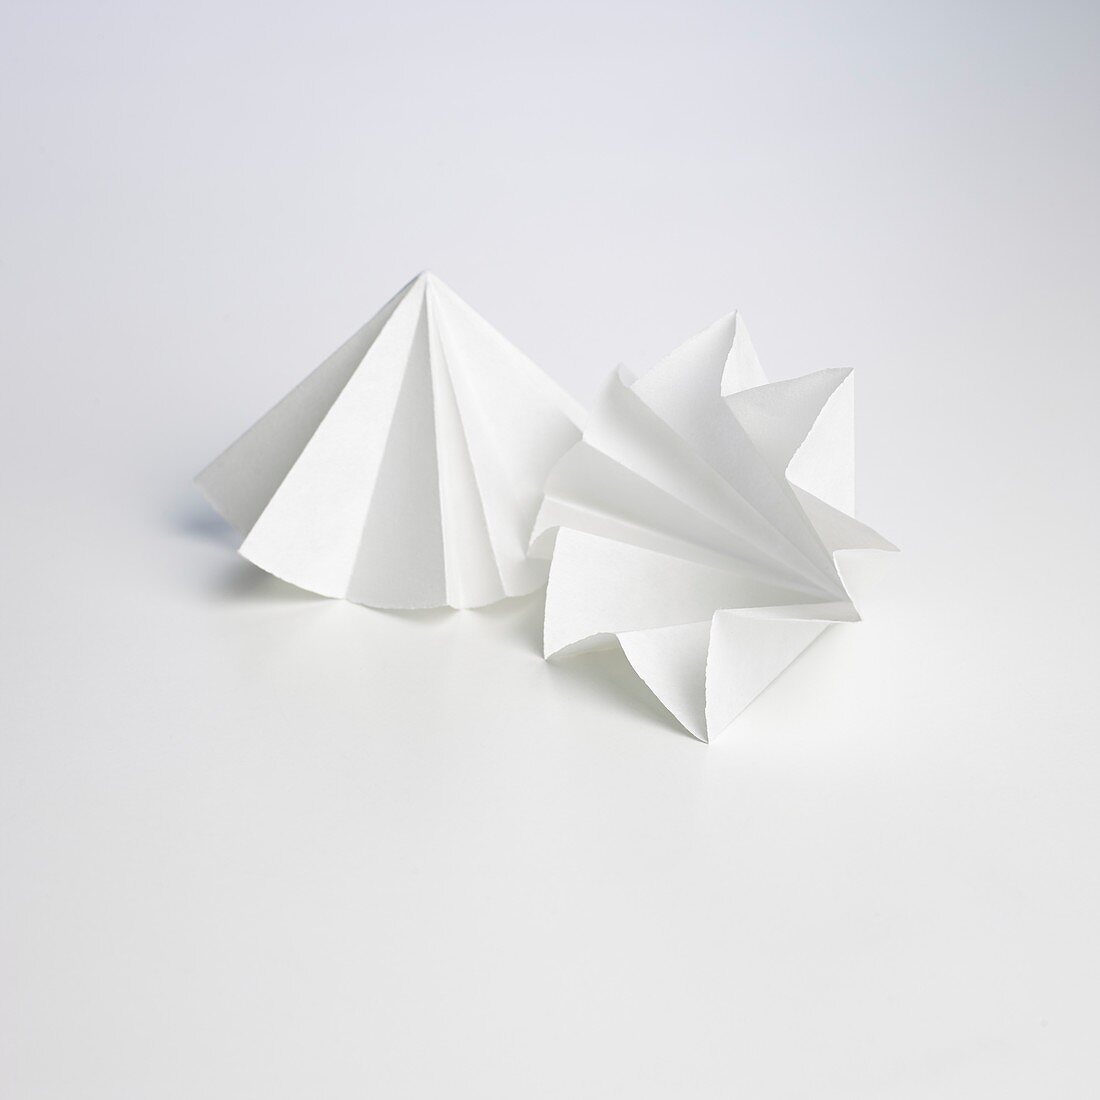 Folded filter paper